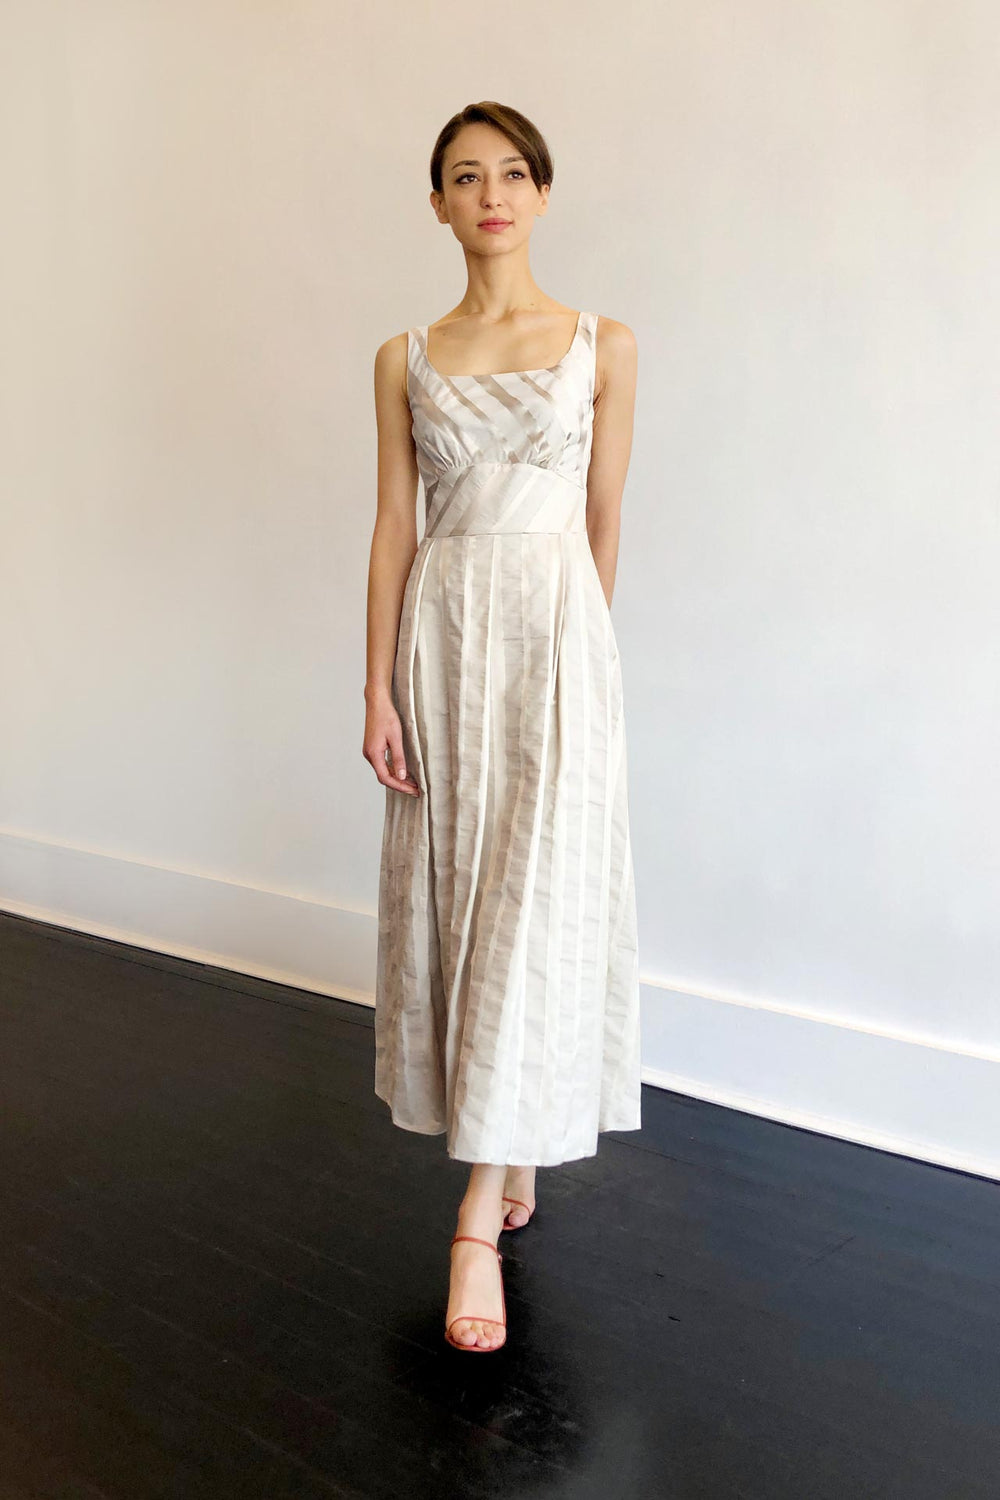 Fashion Designer CARL KAPP collection | Lyria White Dress | Sydney Australia